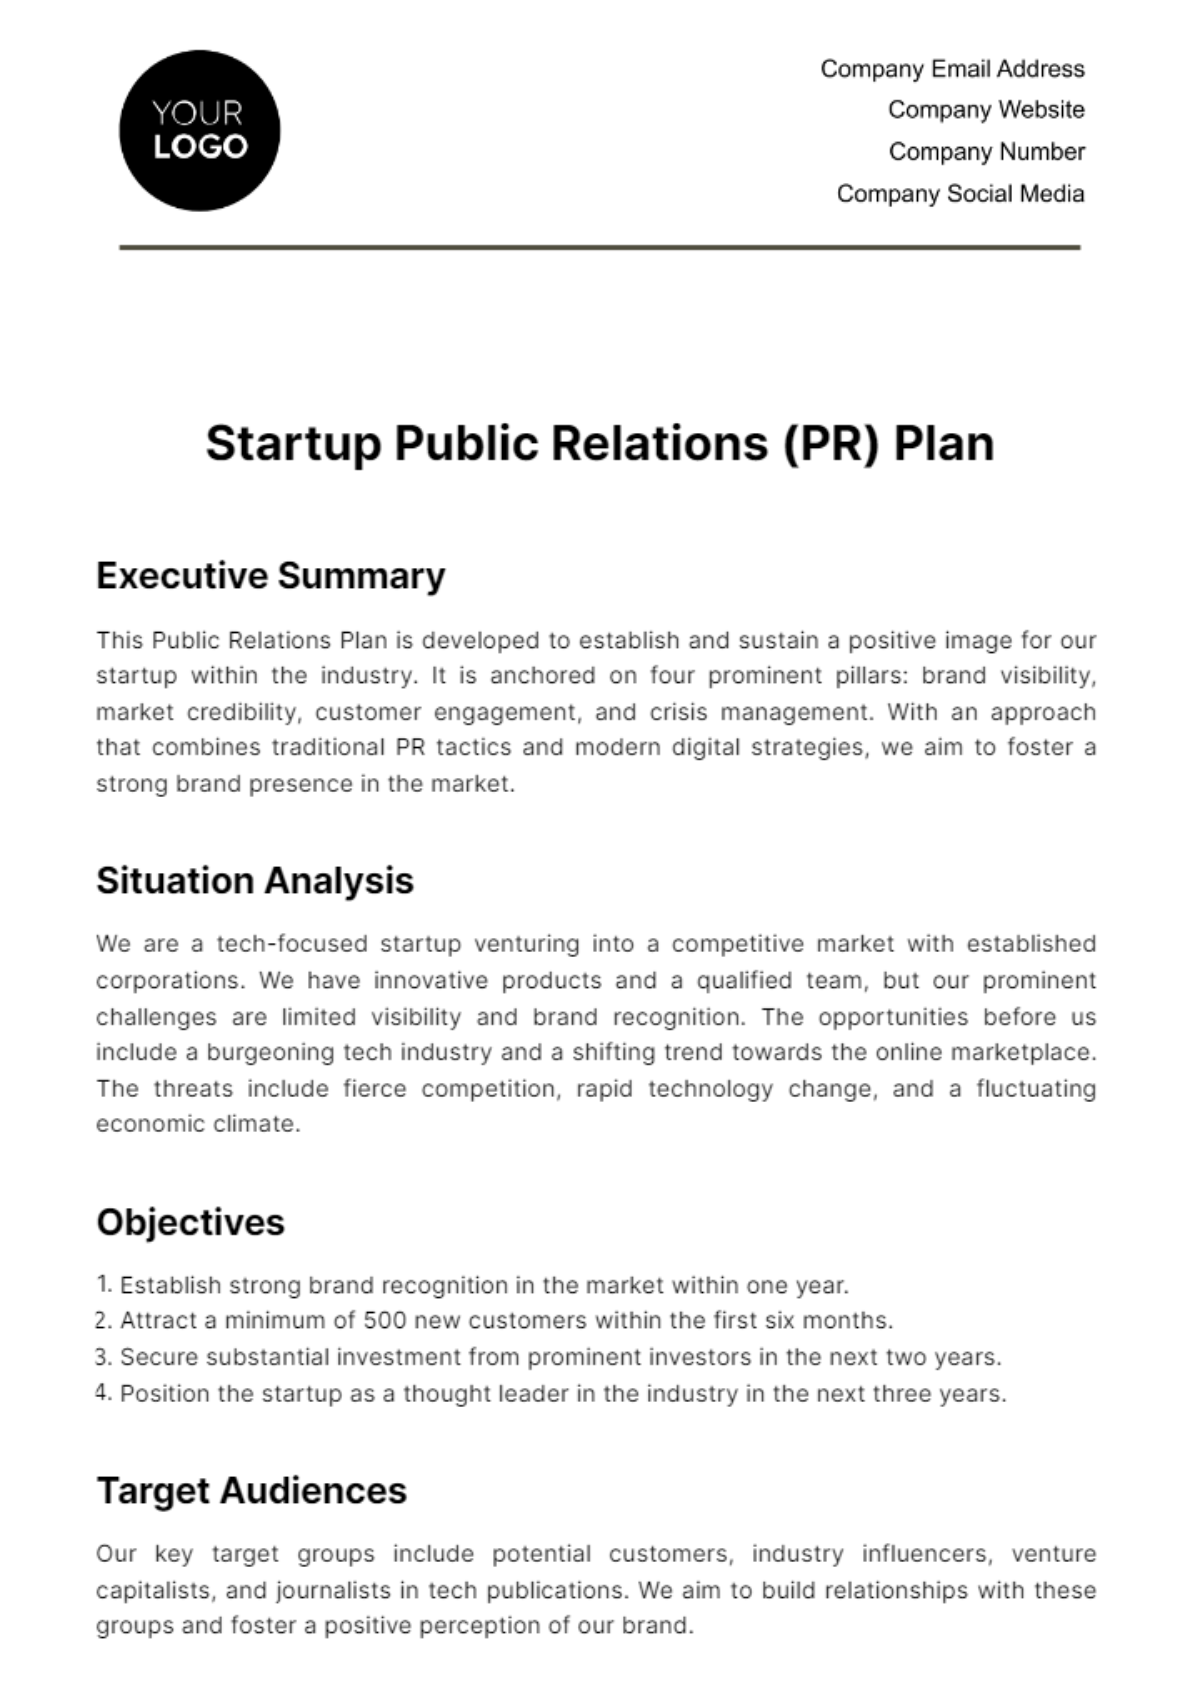 Startup Public Relations (PR) Plan Template